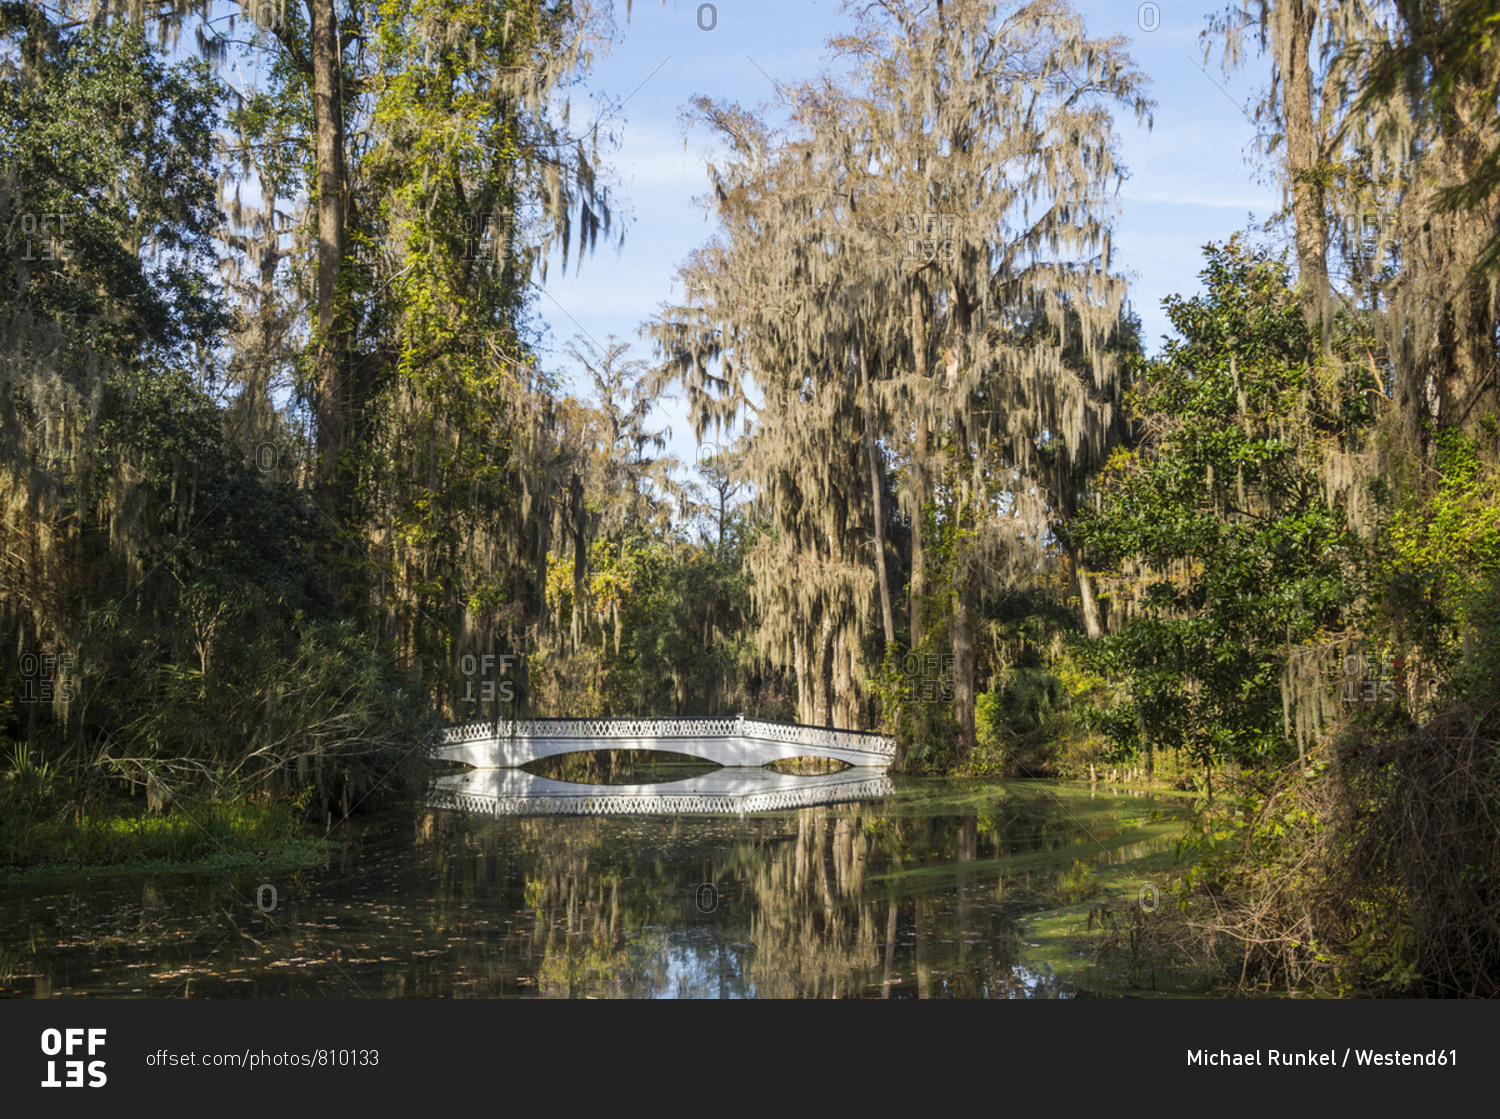 USA- South Carolina- Charleston- White bridge reflecting in a pond in the Magnolia Plantation